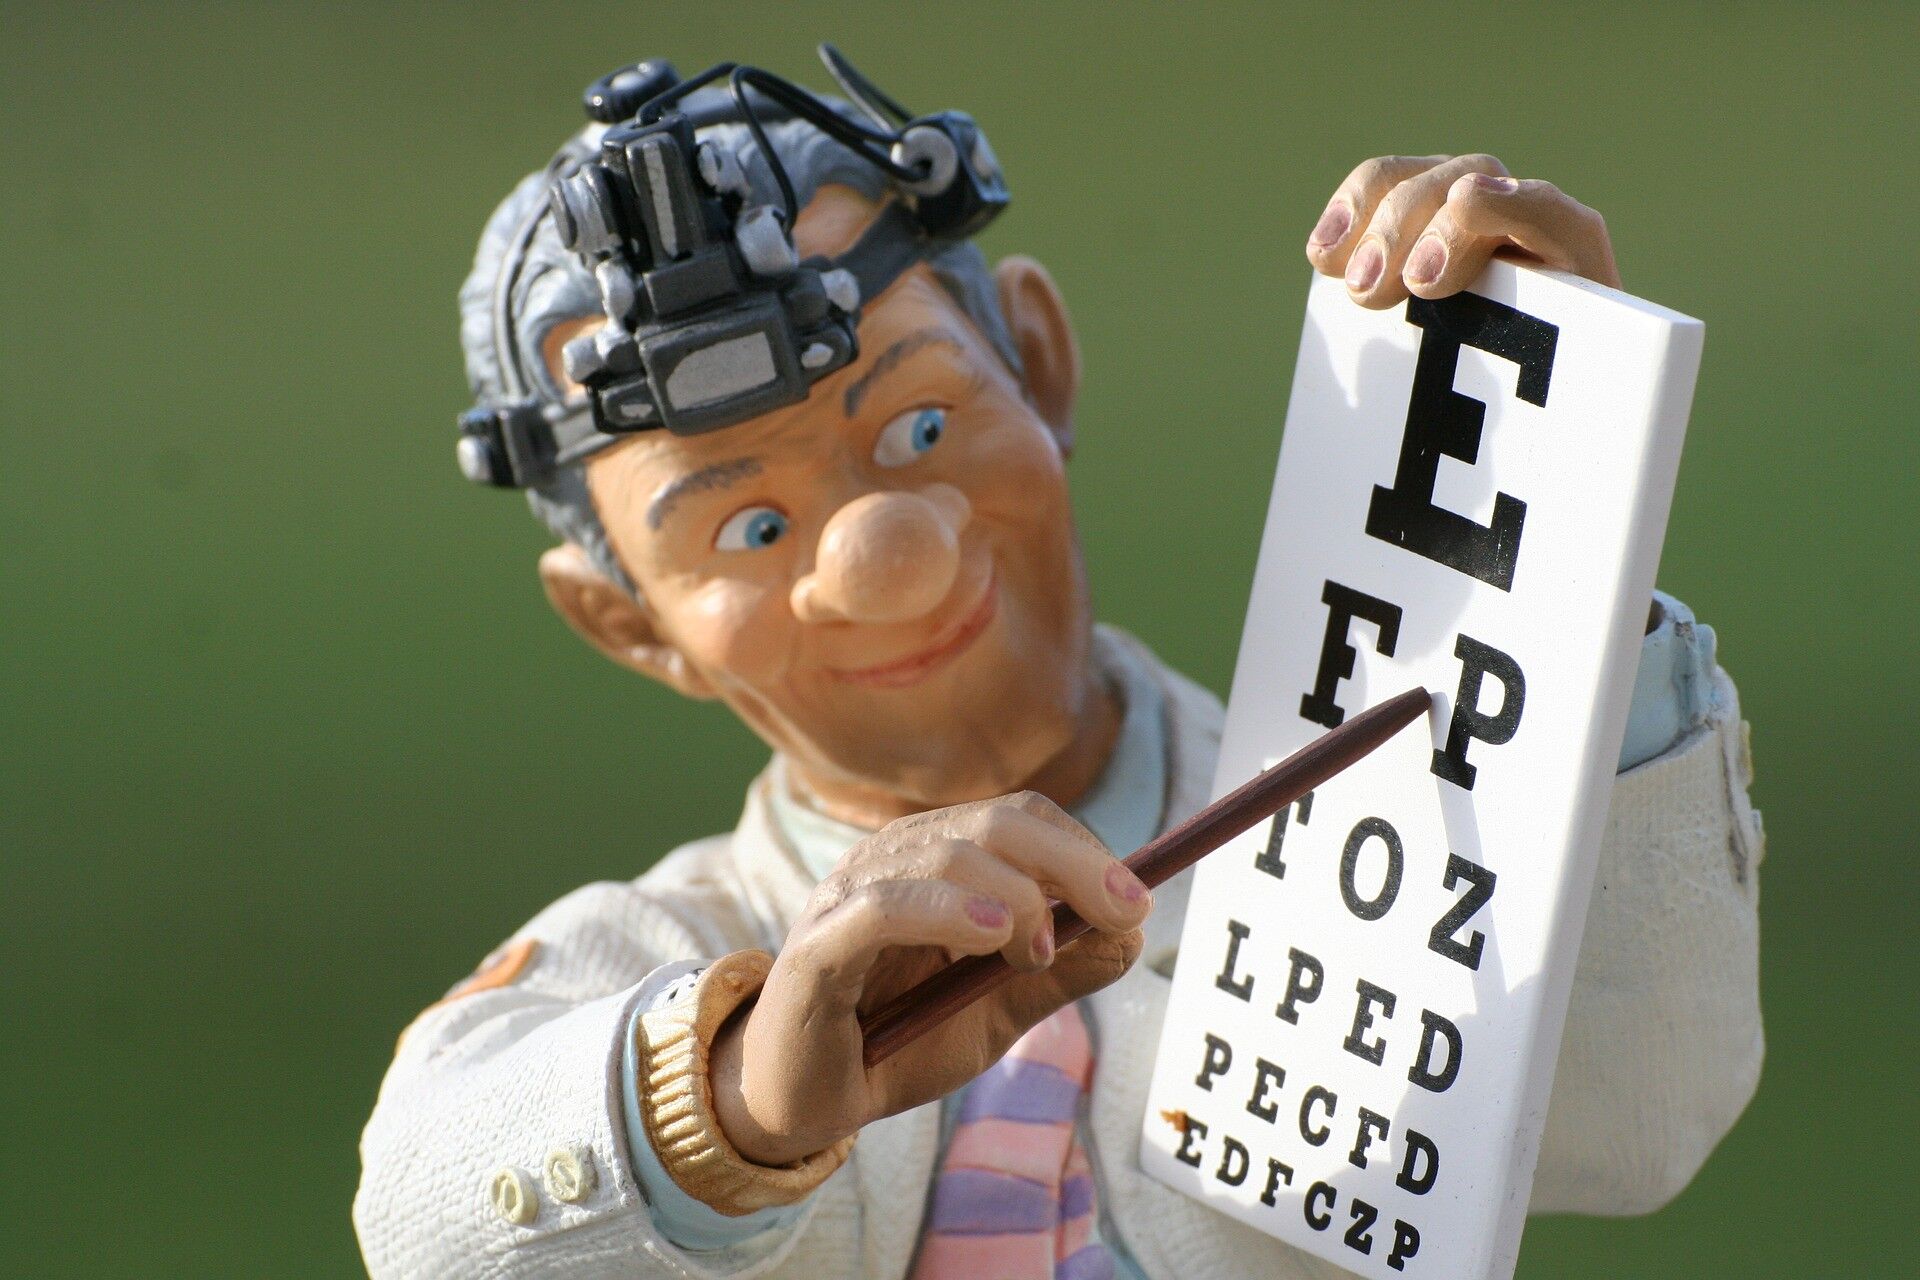 Toy optician indicating an eye chart